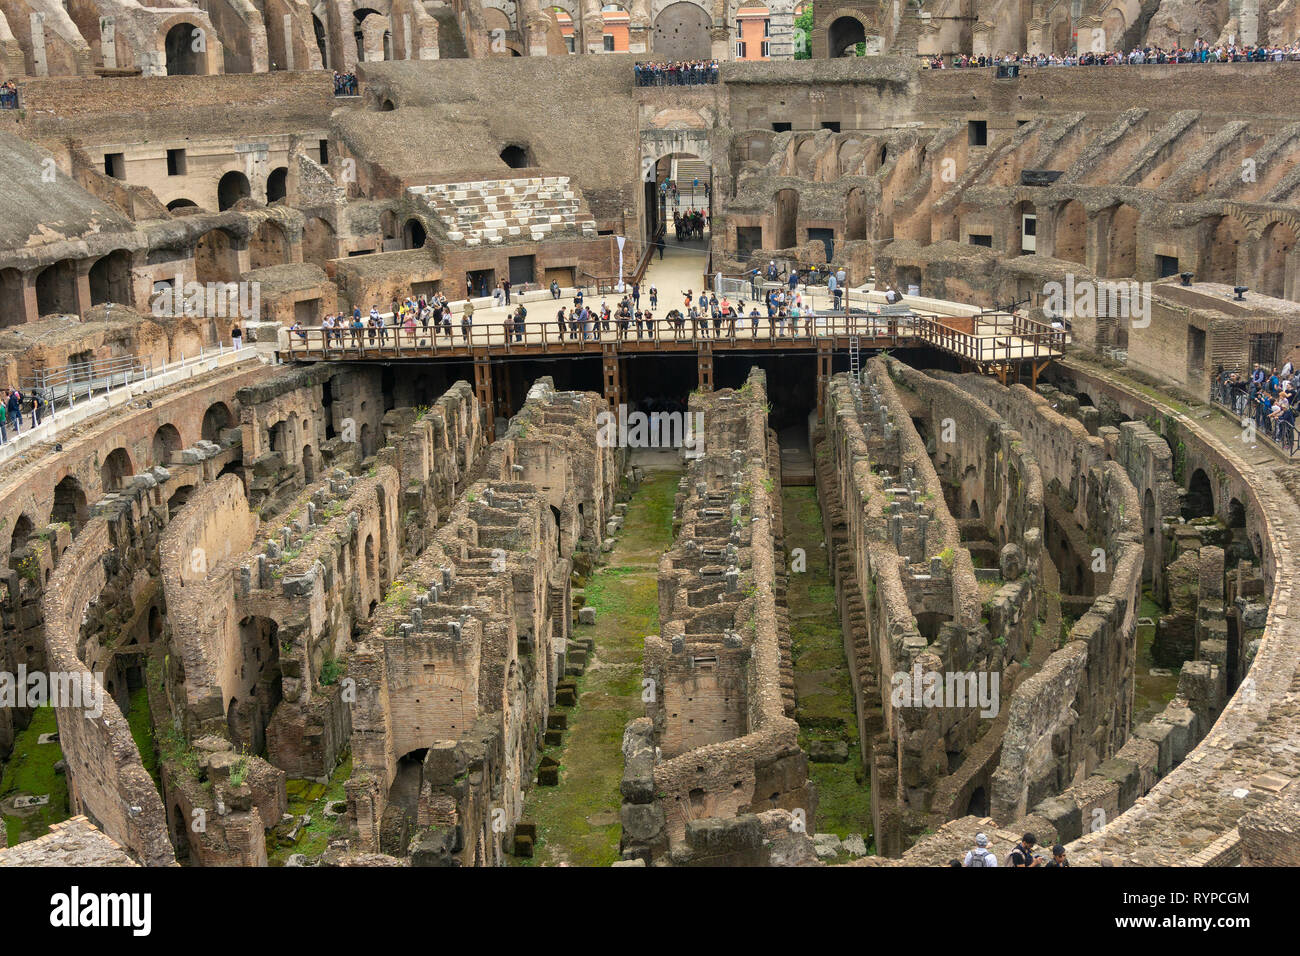 Roman Coliseum interior. Stock Photo